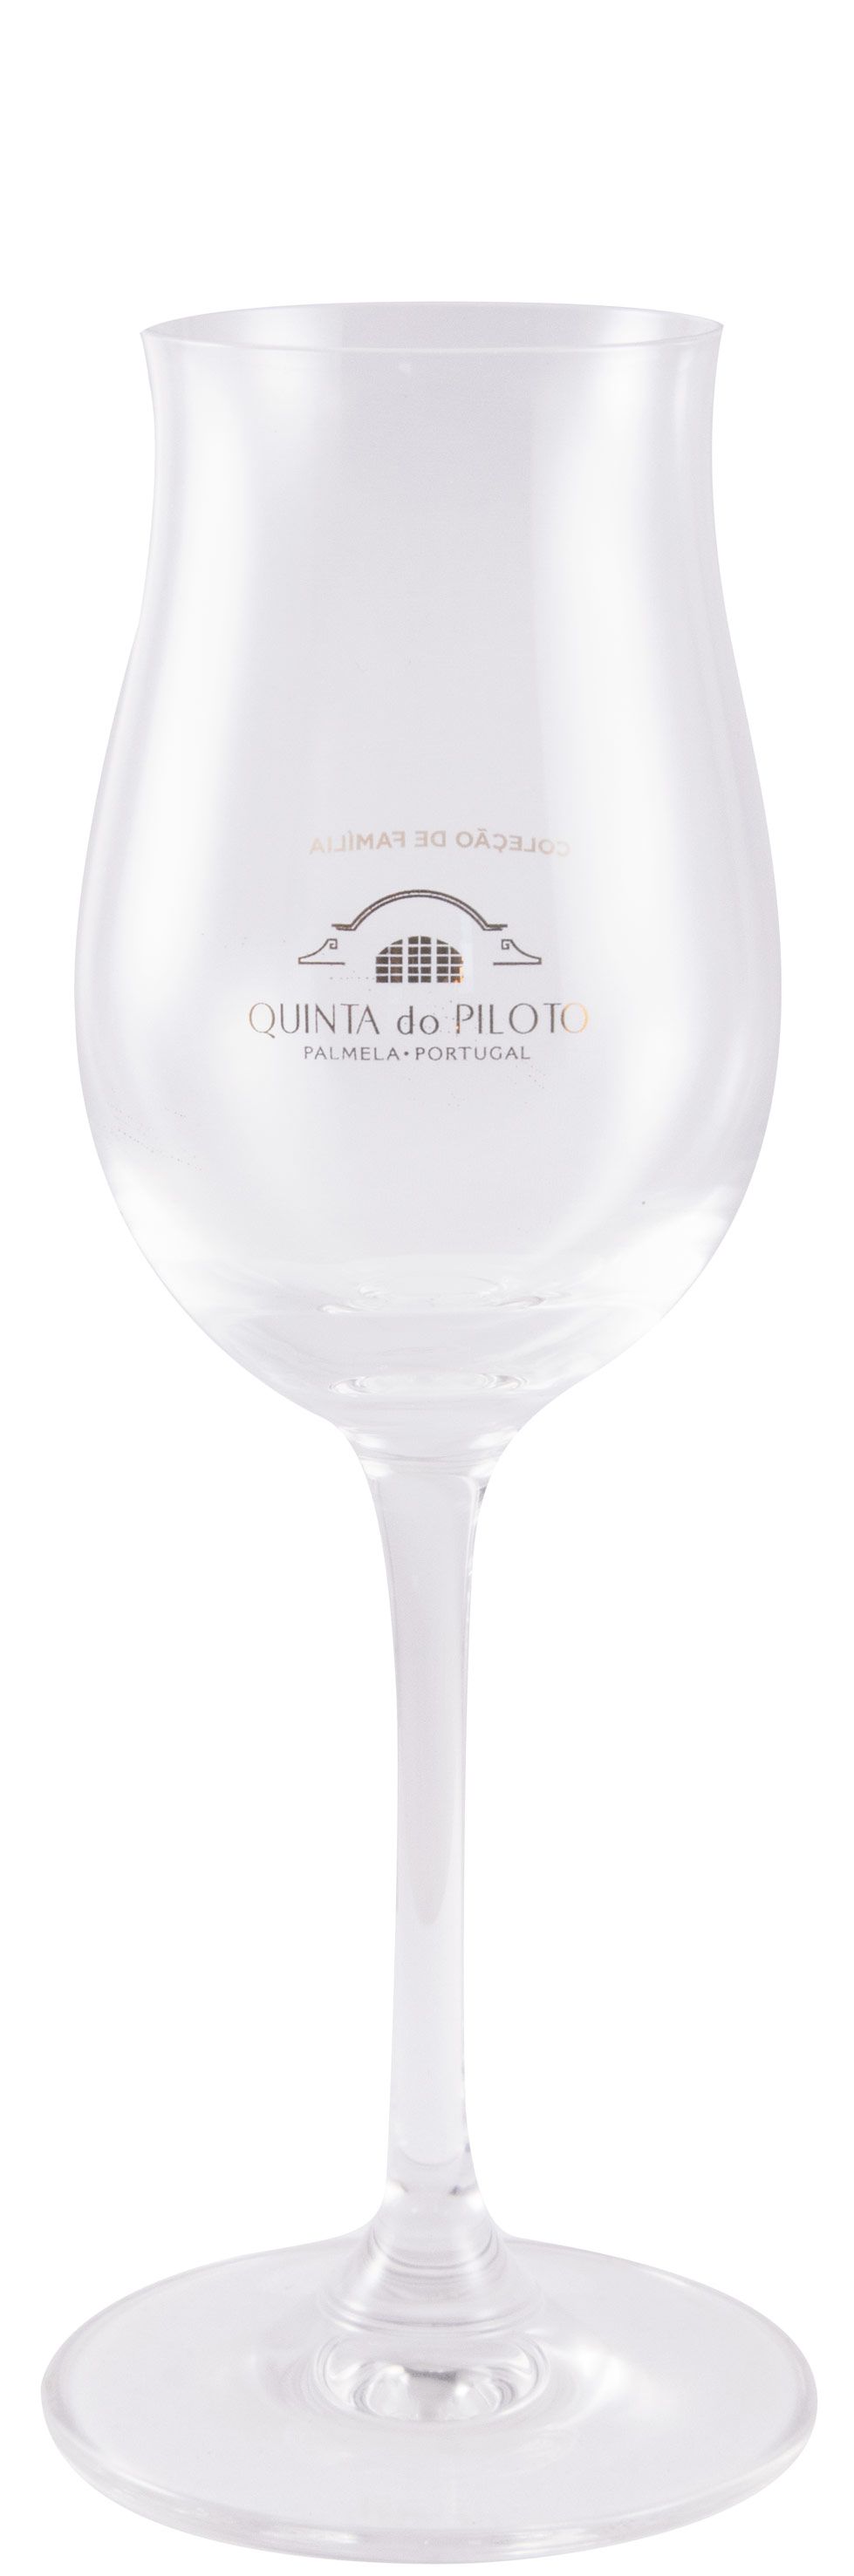 Moscatel de Setúbal Quinta do Piloto Coleção da Família 11/25 Limited Edition (bottled in 2021) 50cl